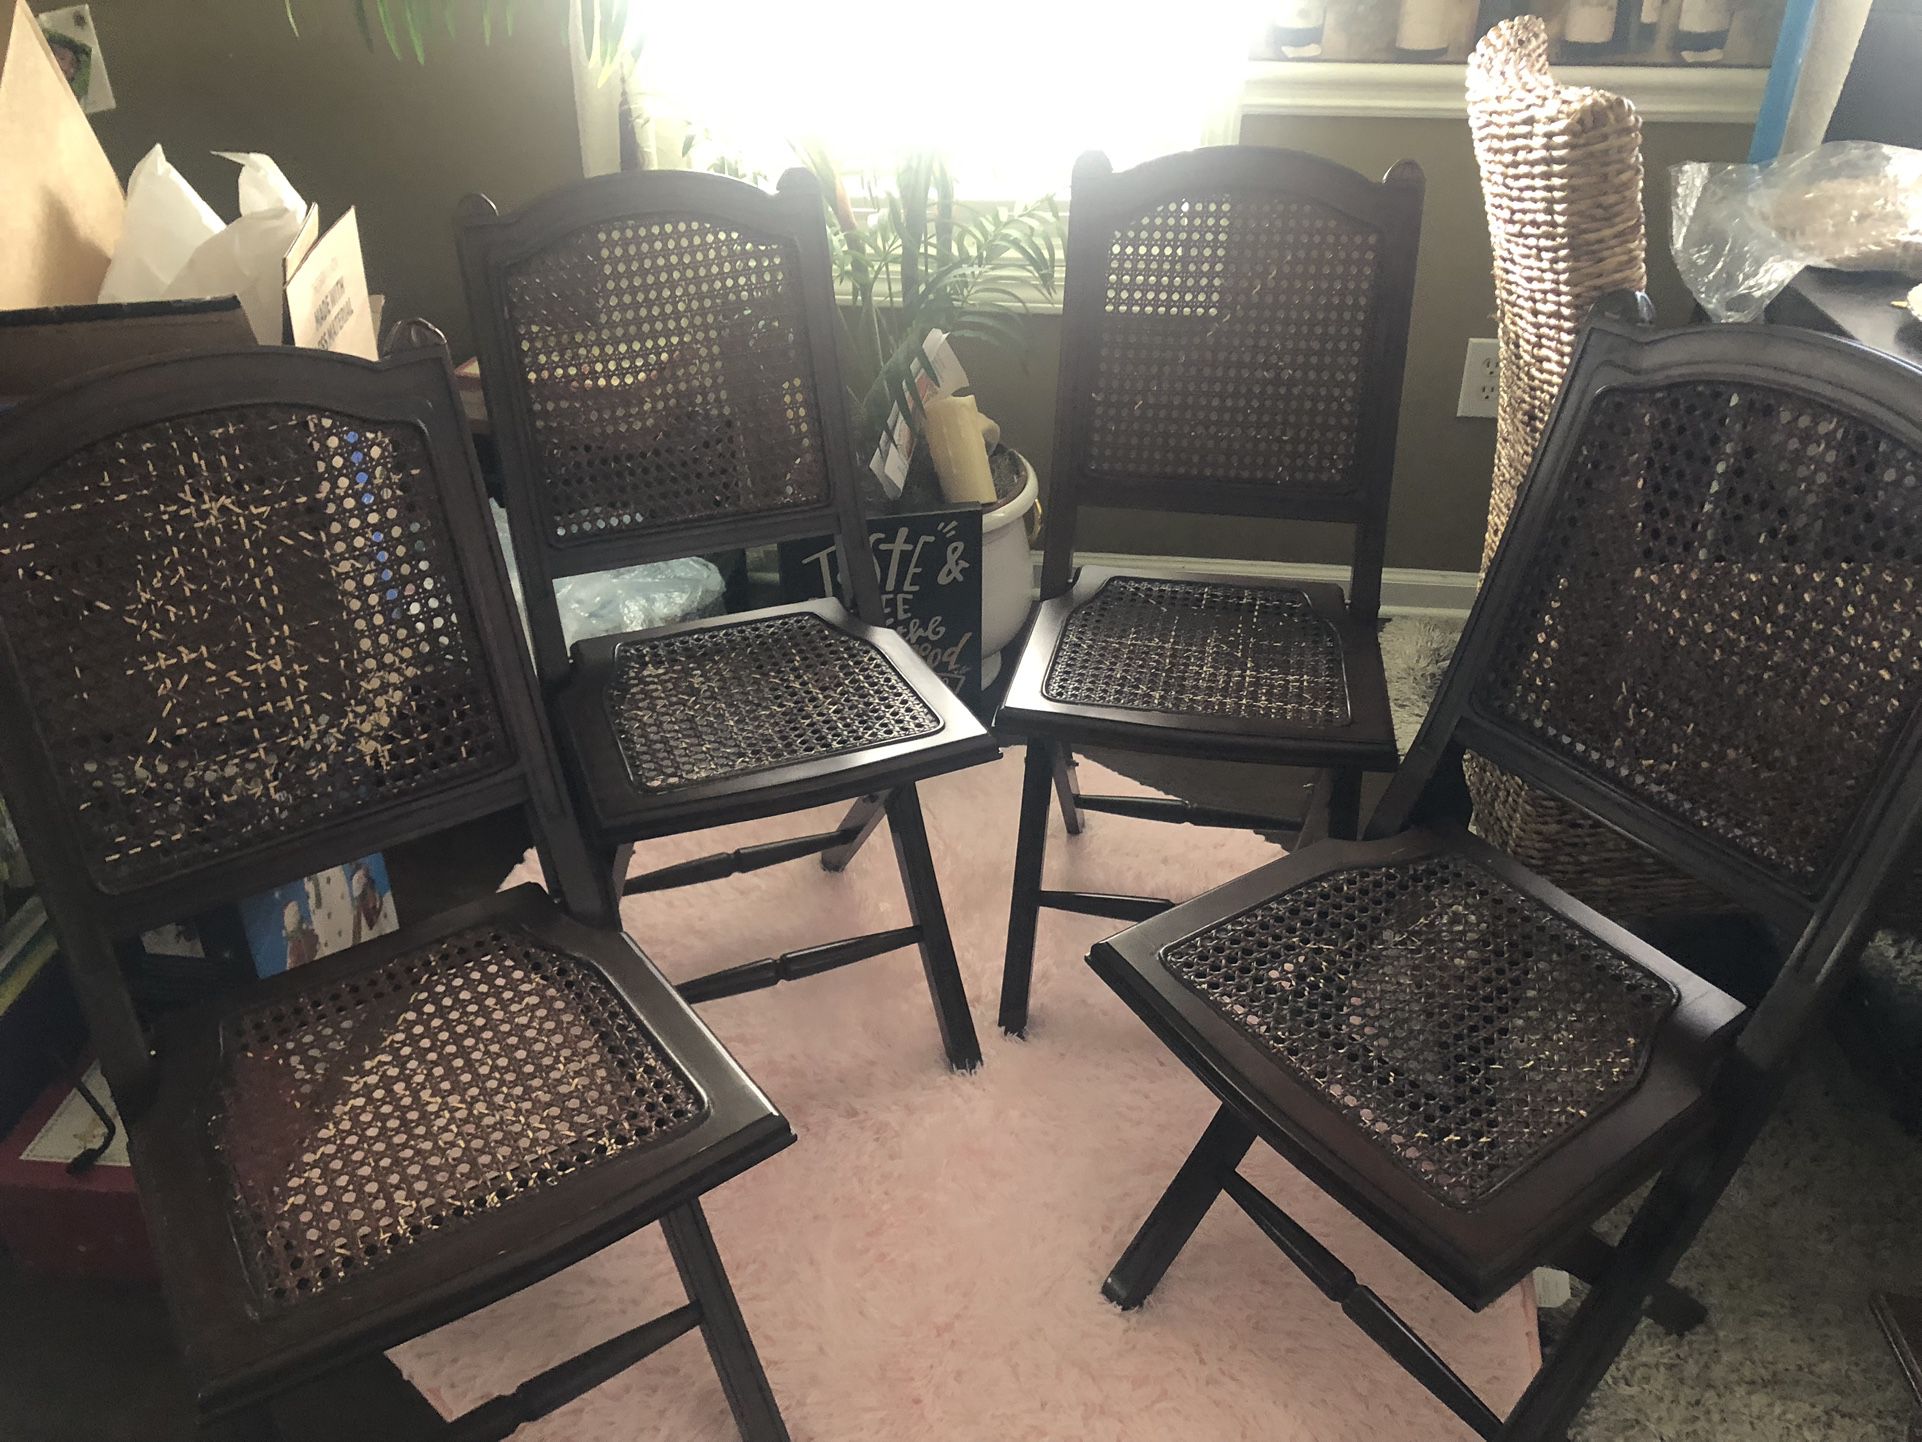 Mahogany Cane Folding Chairs /$22 each